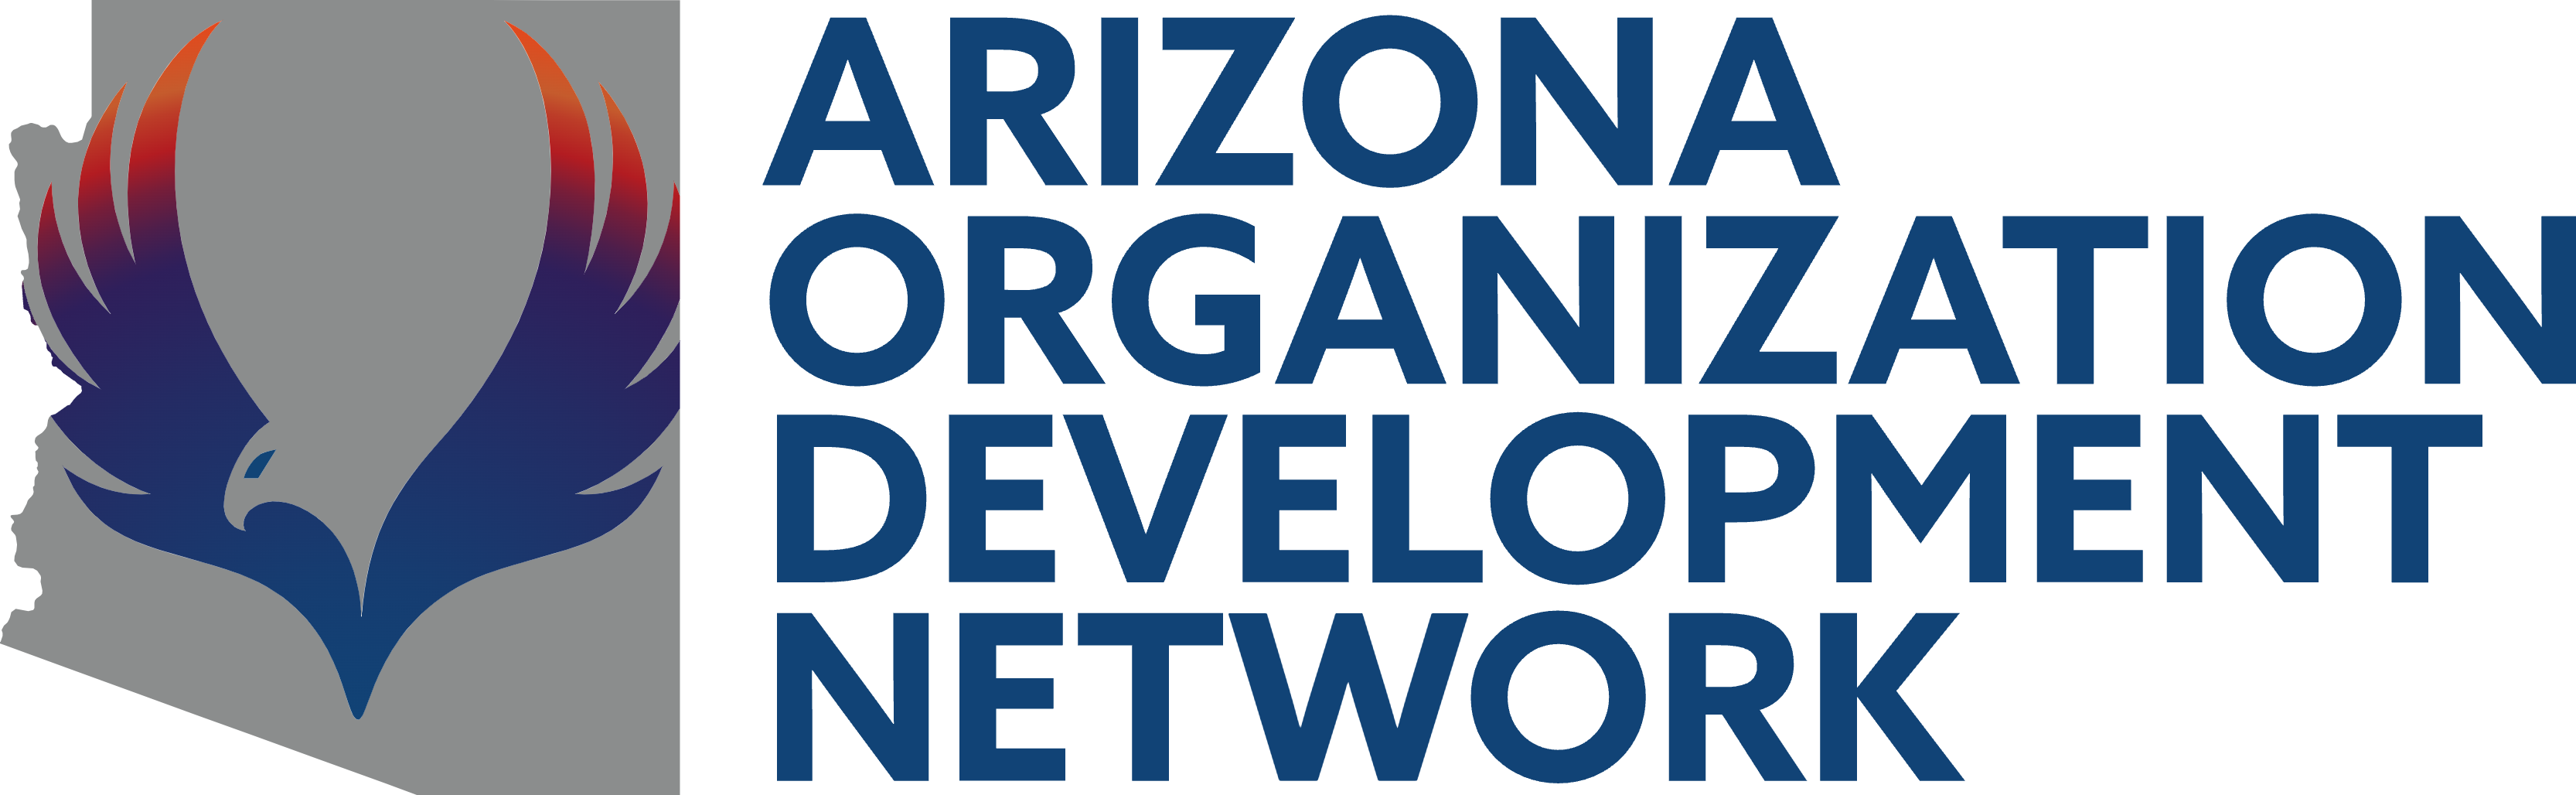 Community Organization Development in Action logo